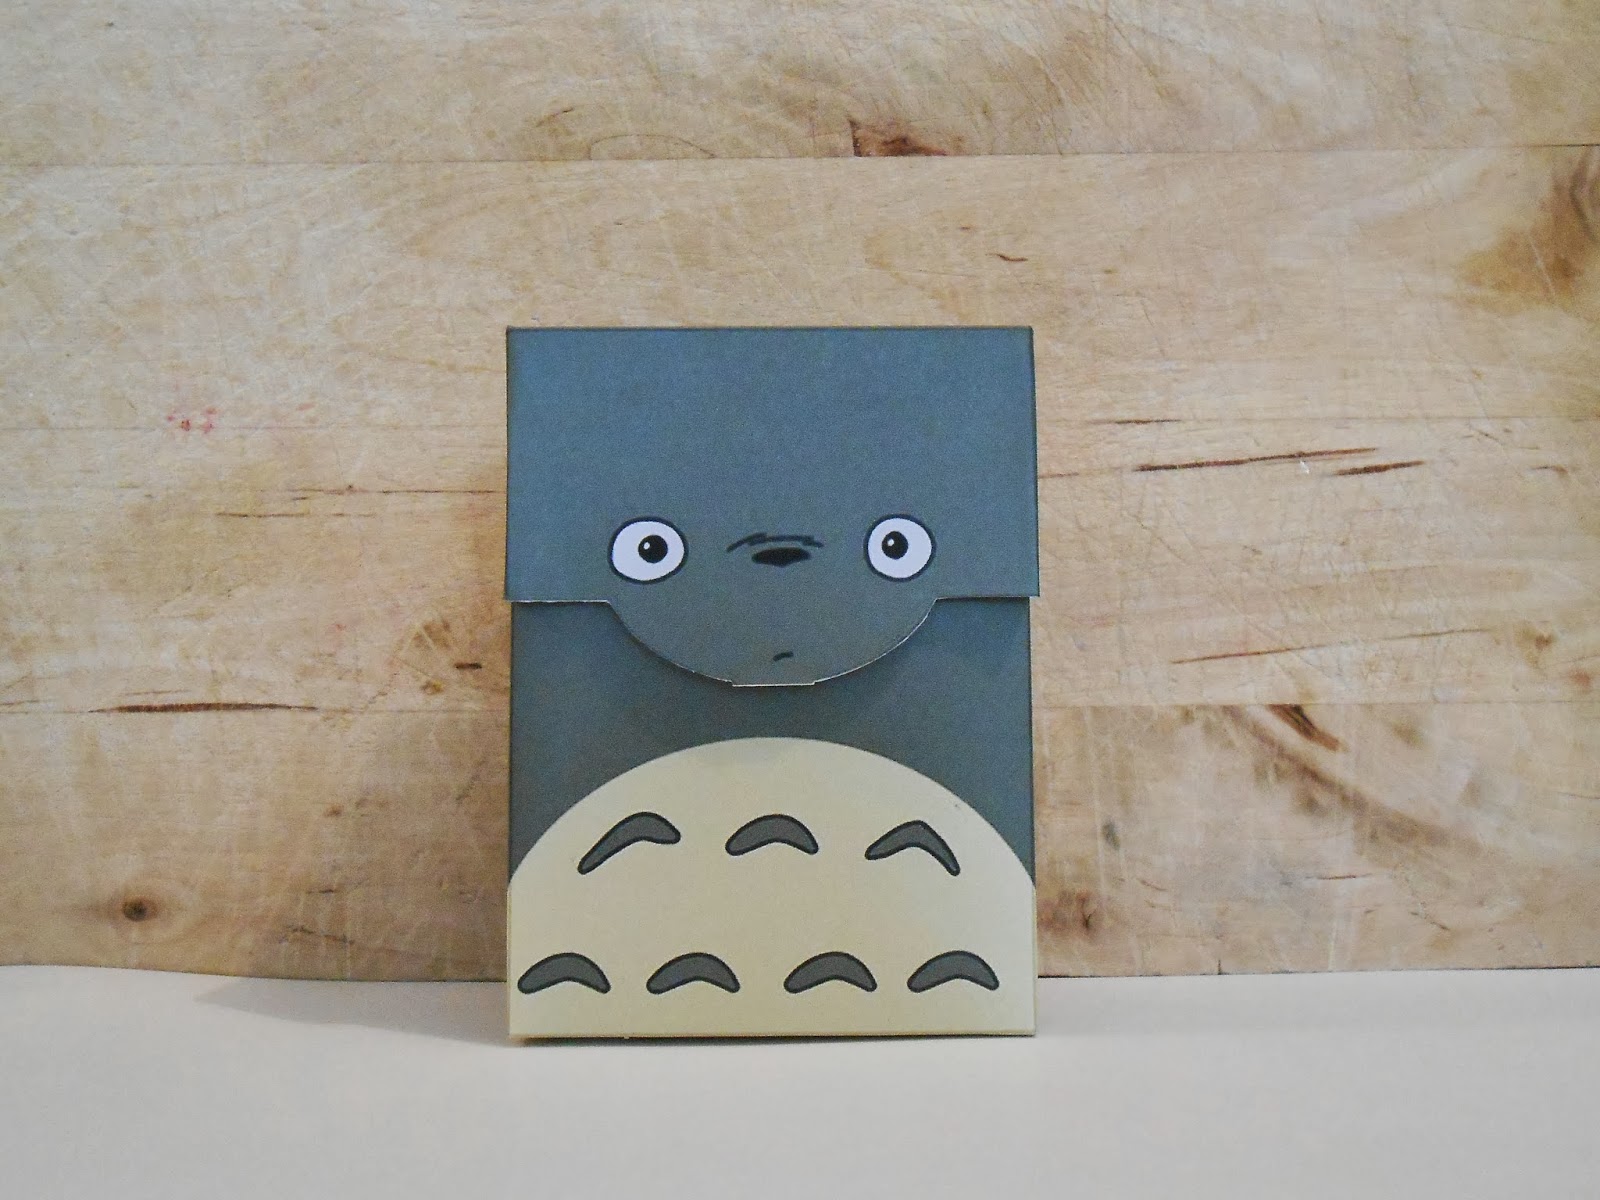 Totoro deck box